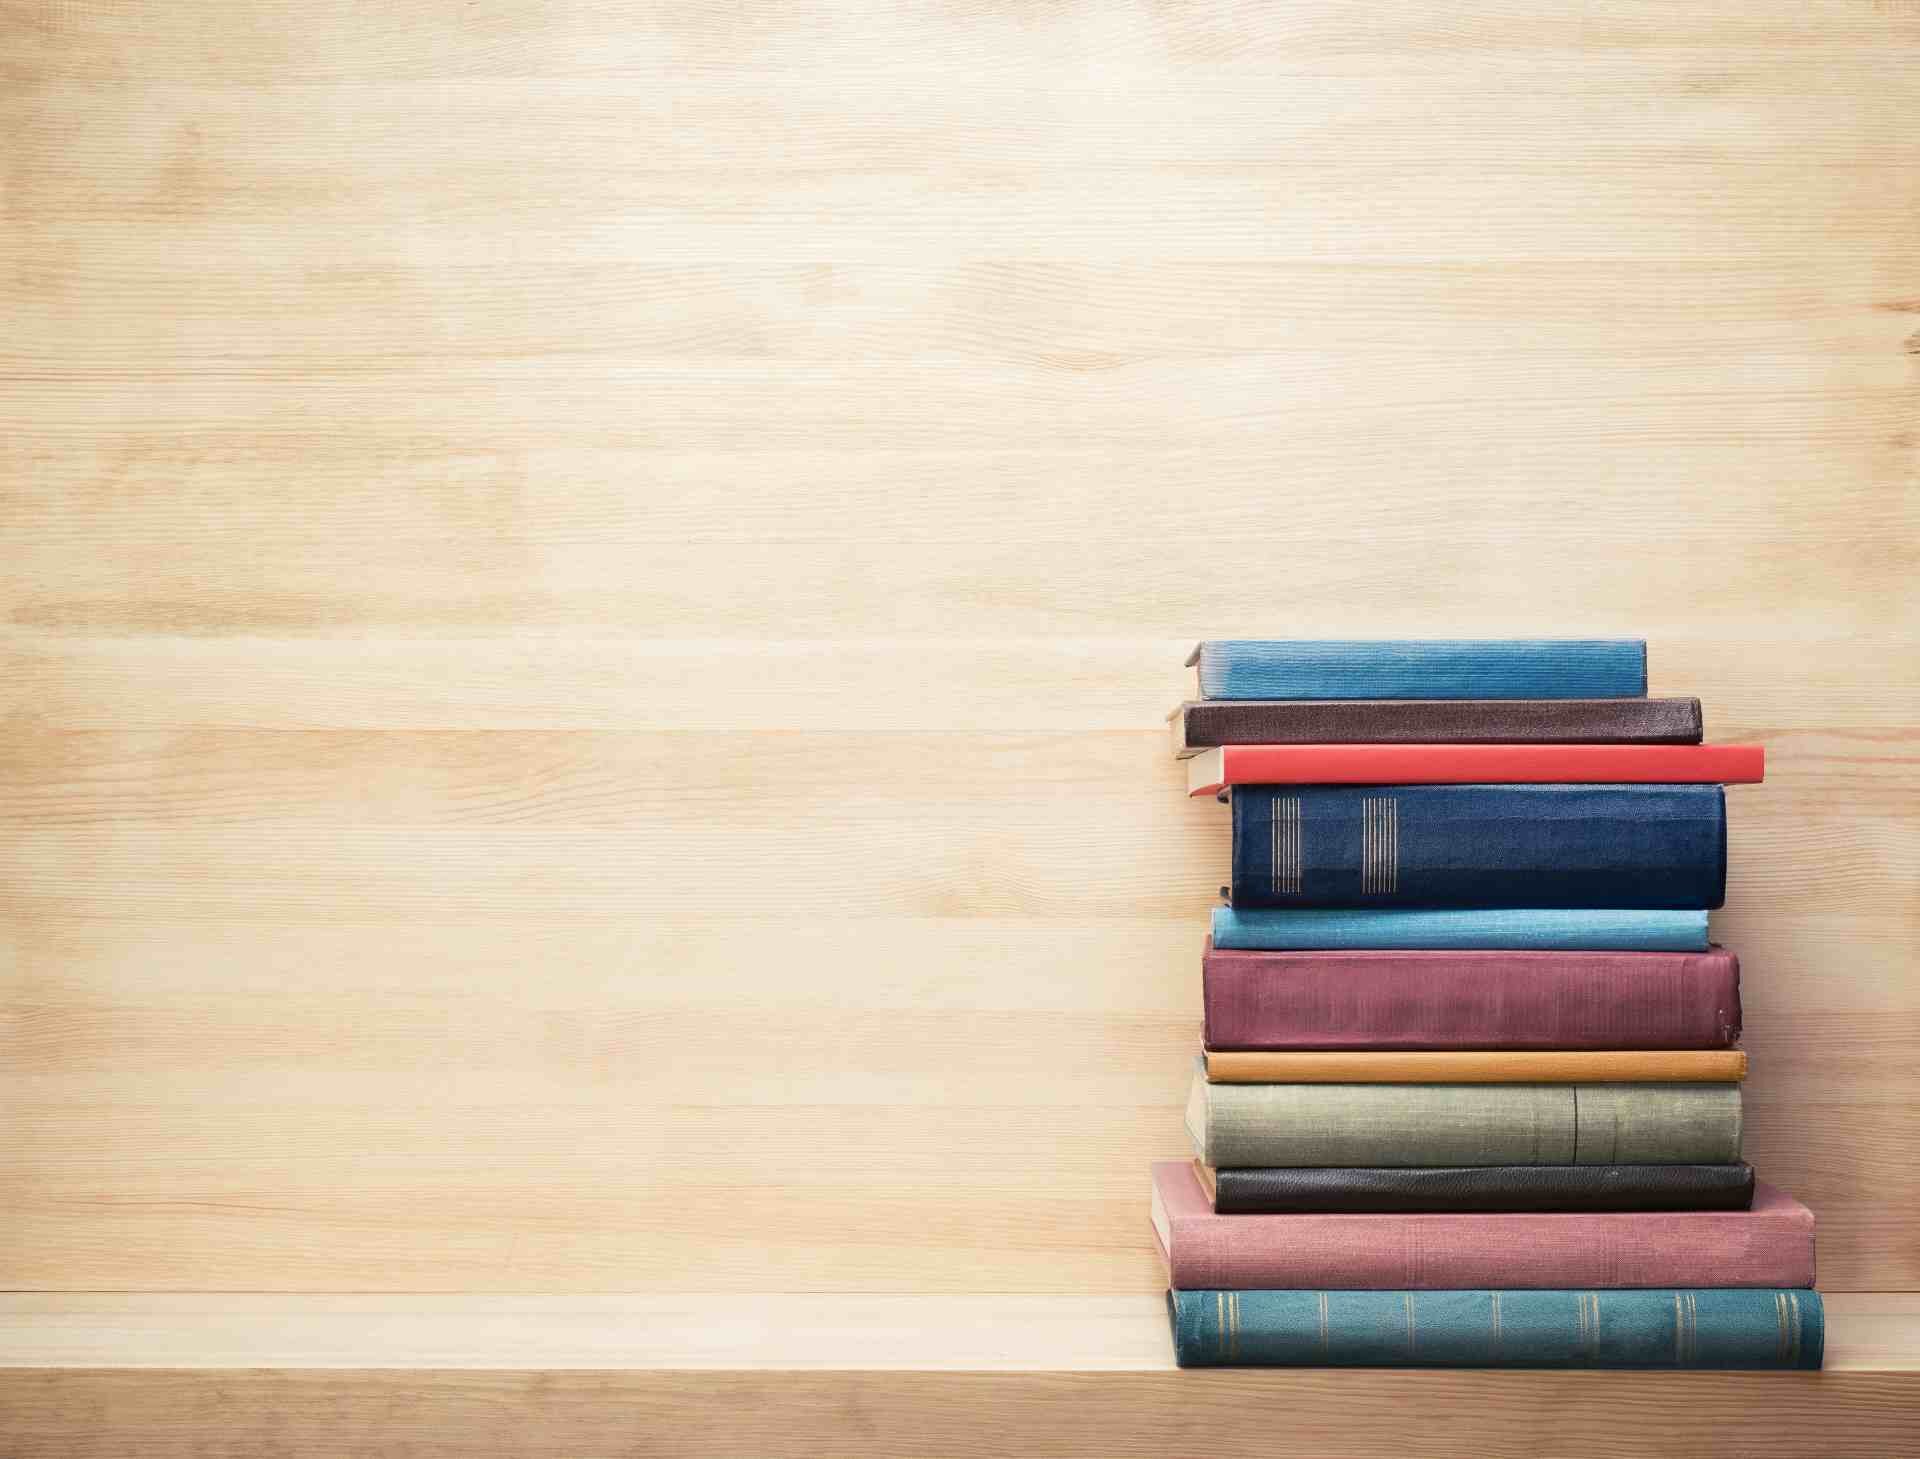 books_on_wooden_table.jpg